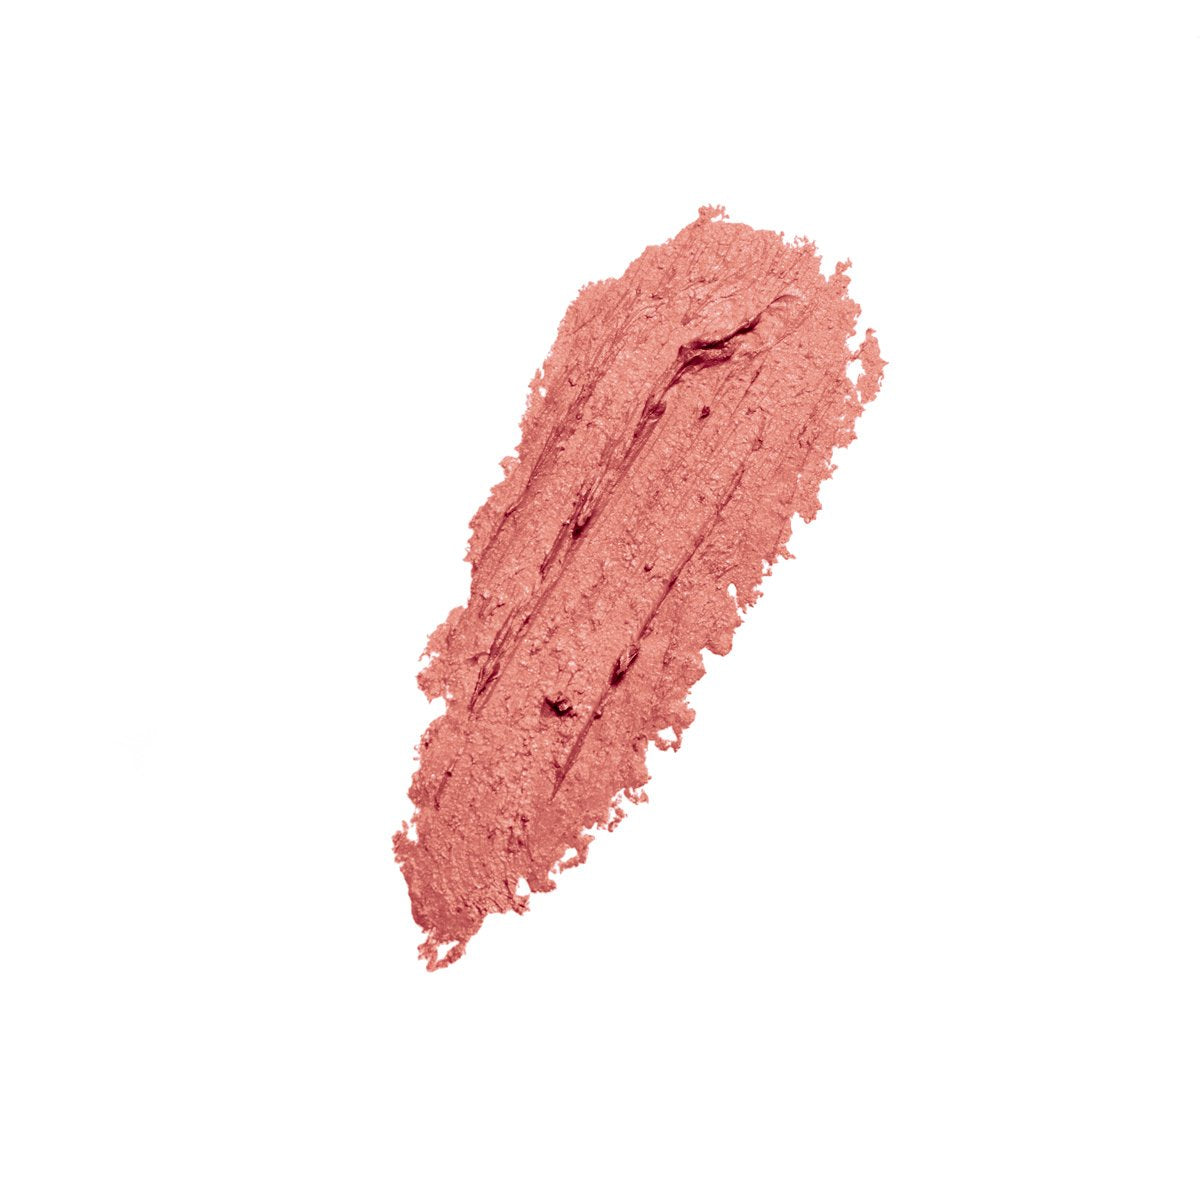 SCANTILLY CLAD - Warm Peach - warm peach long-wearing matte lipstick